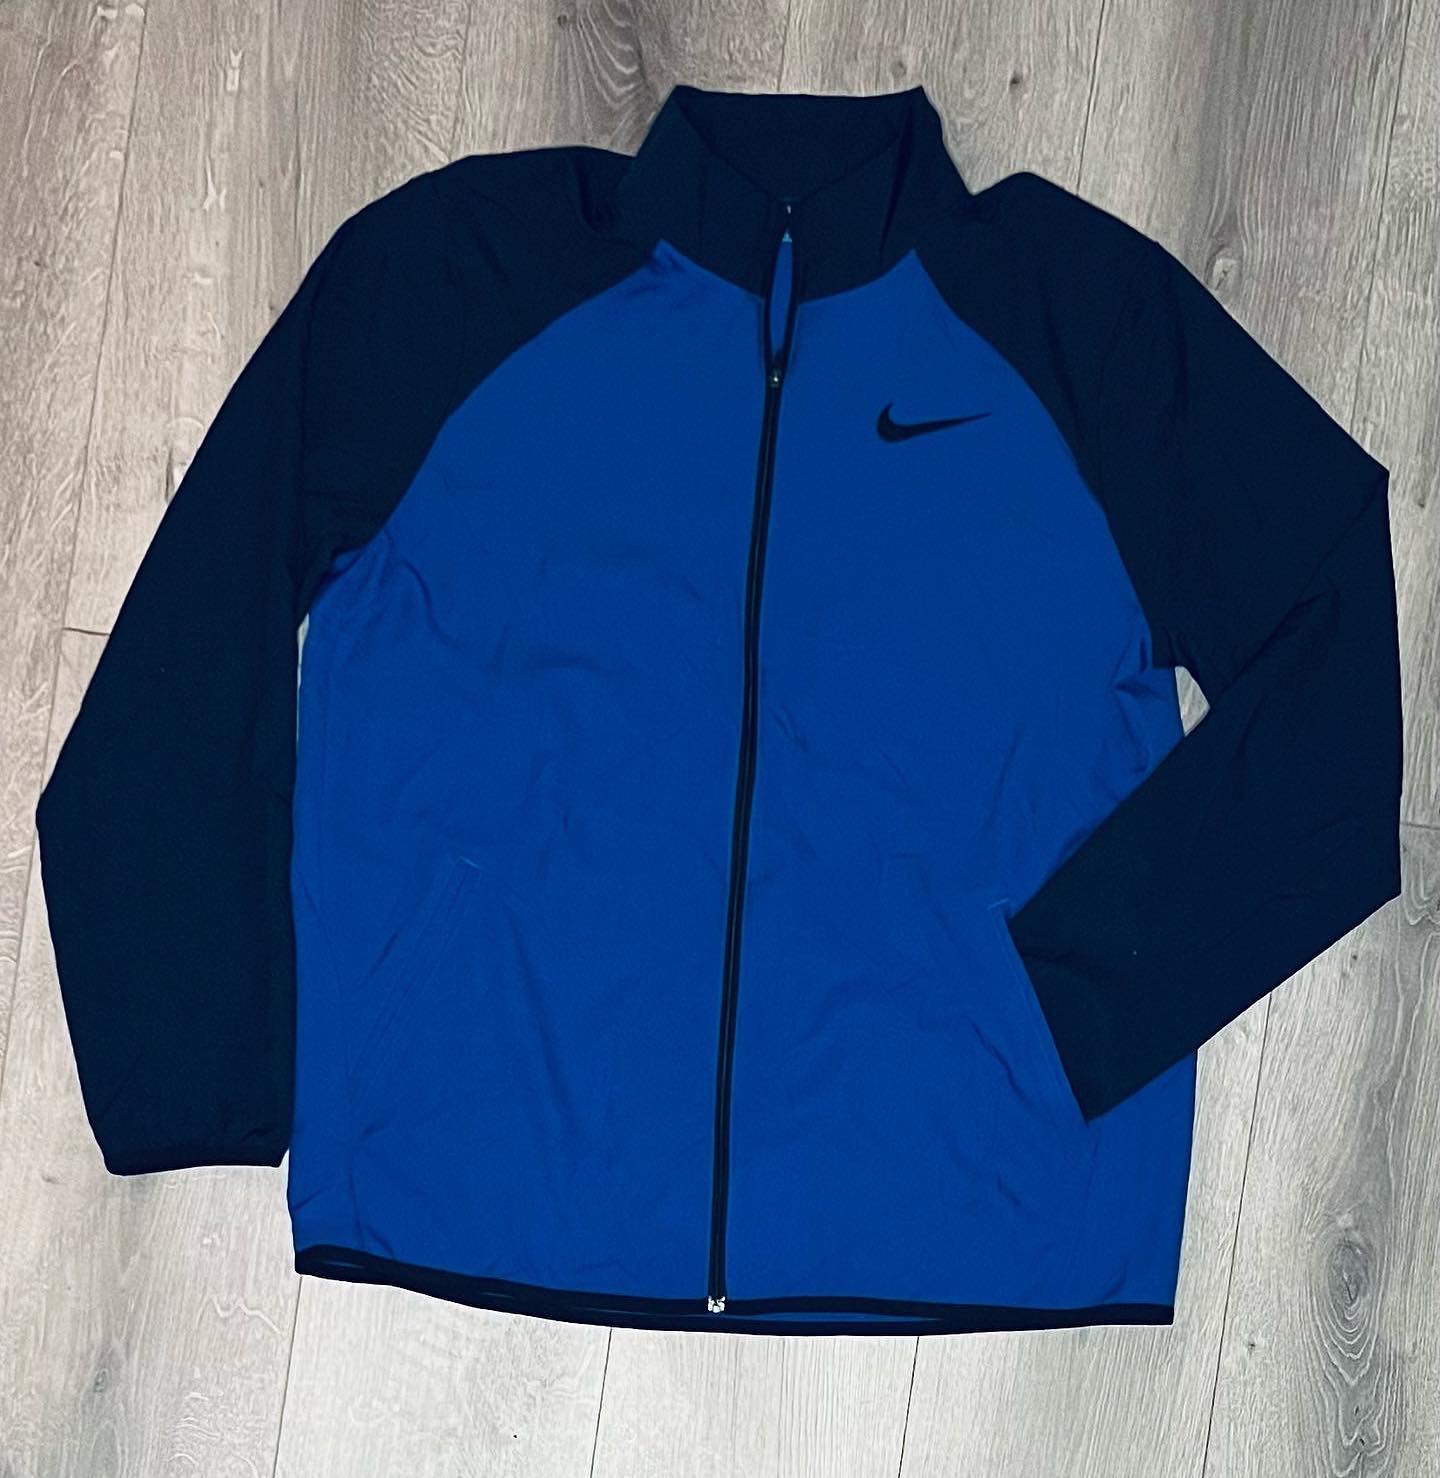 Nike dri fit jacket size m